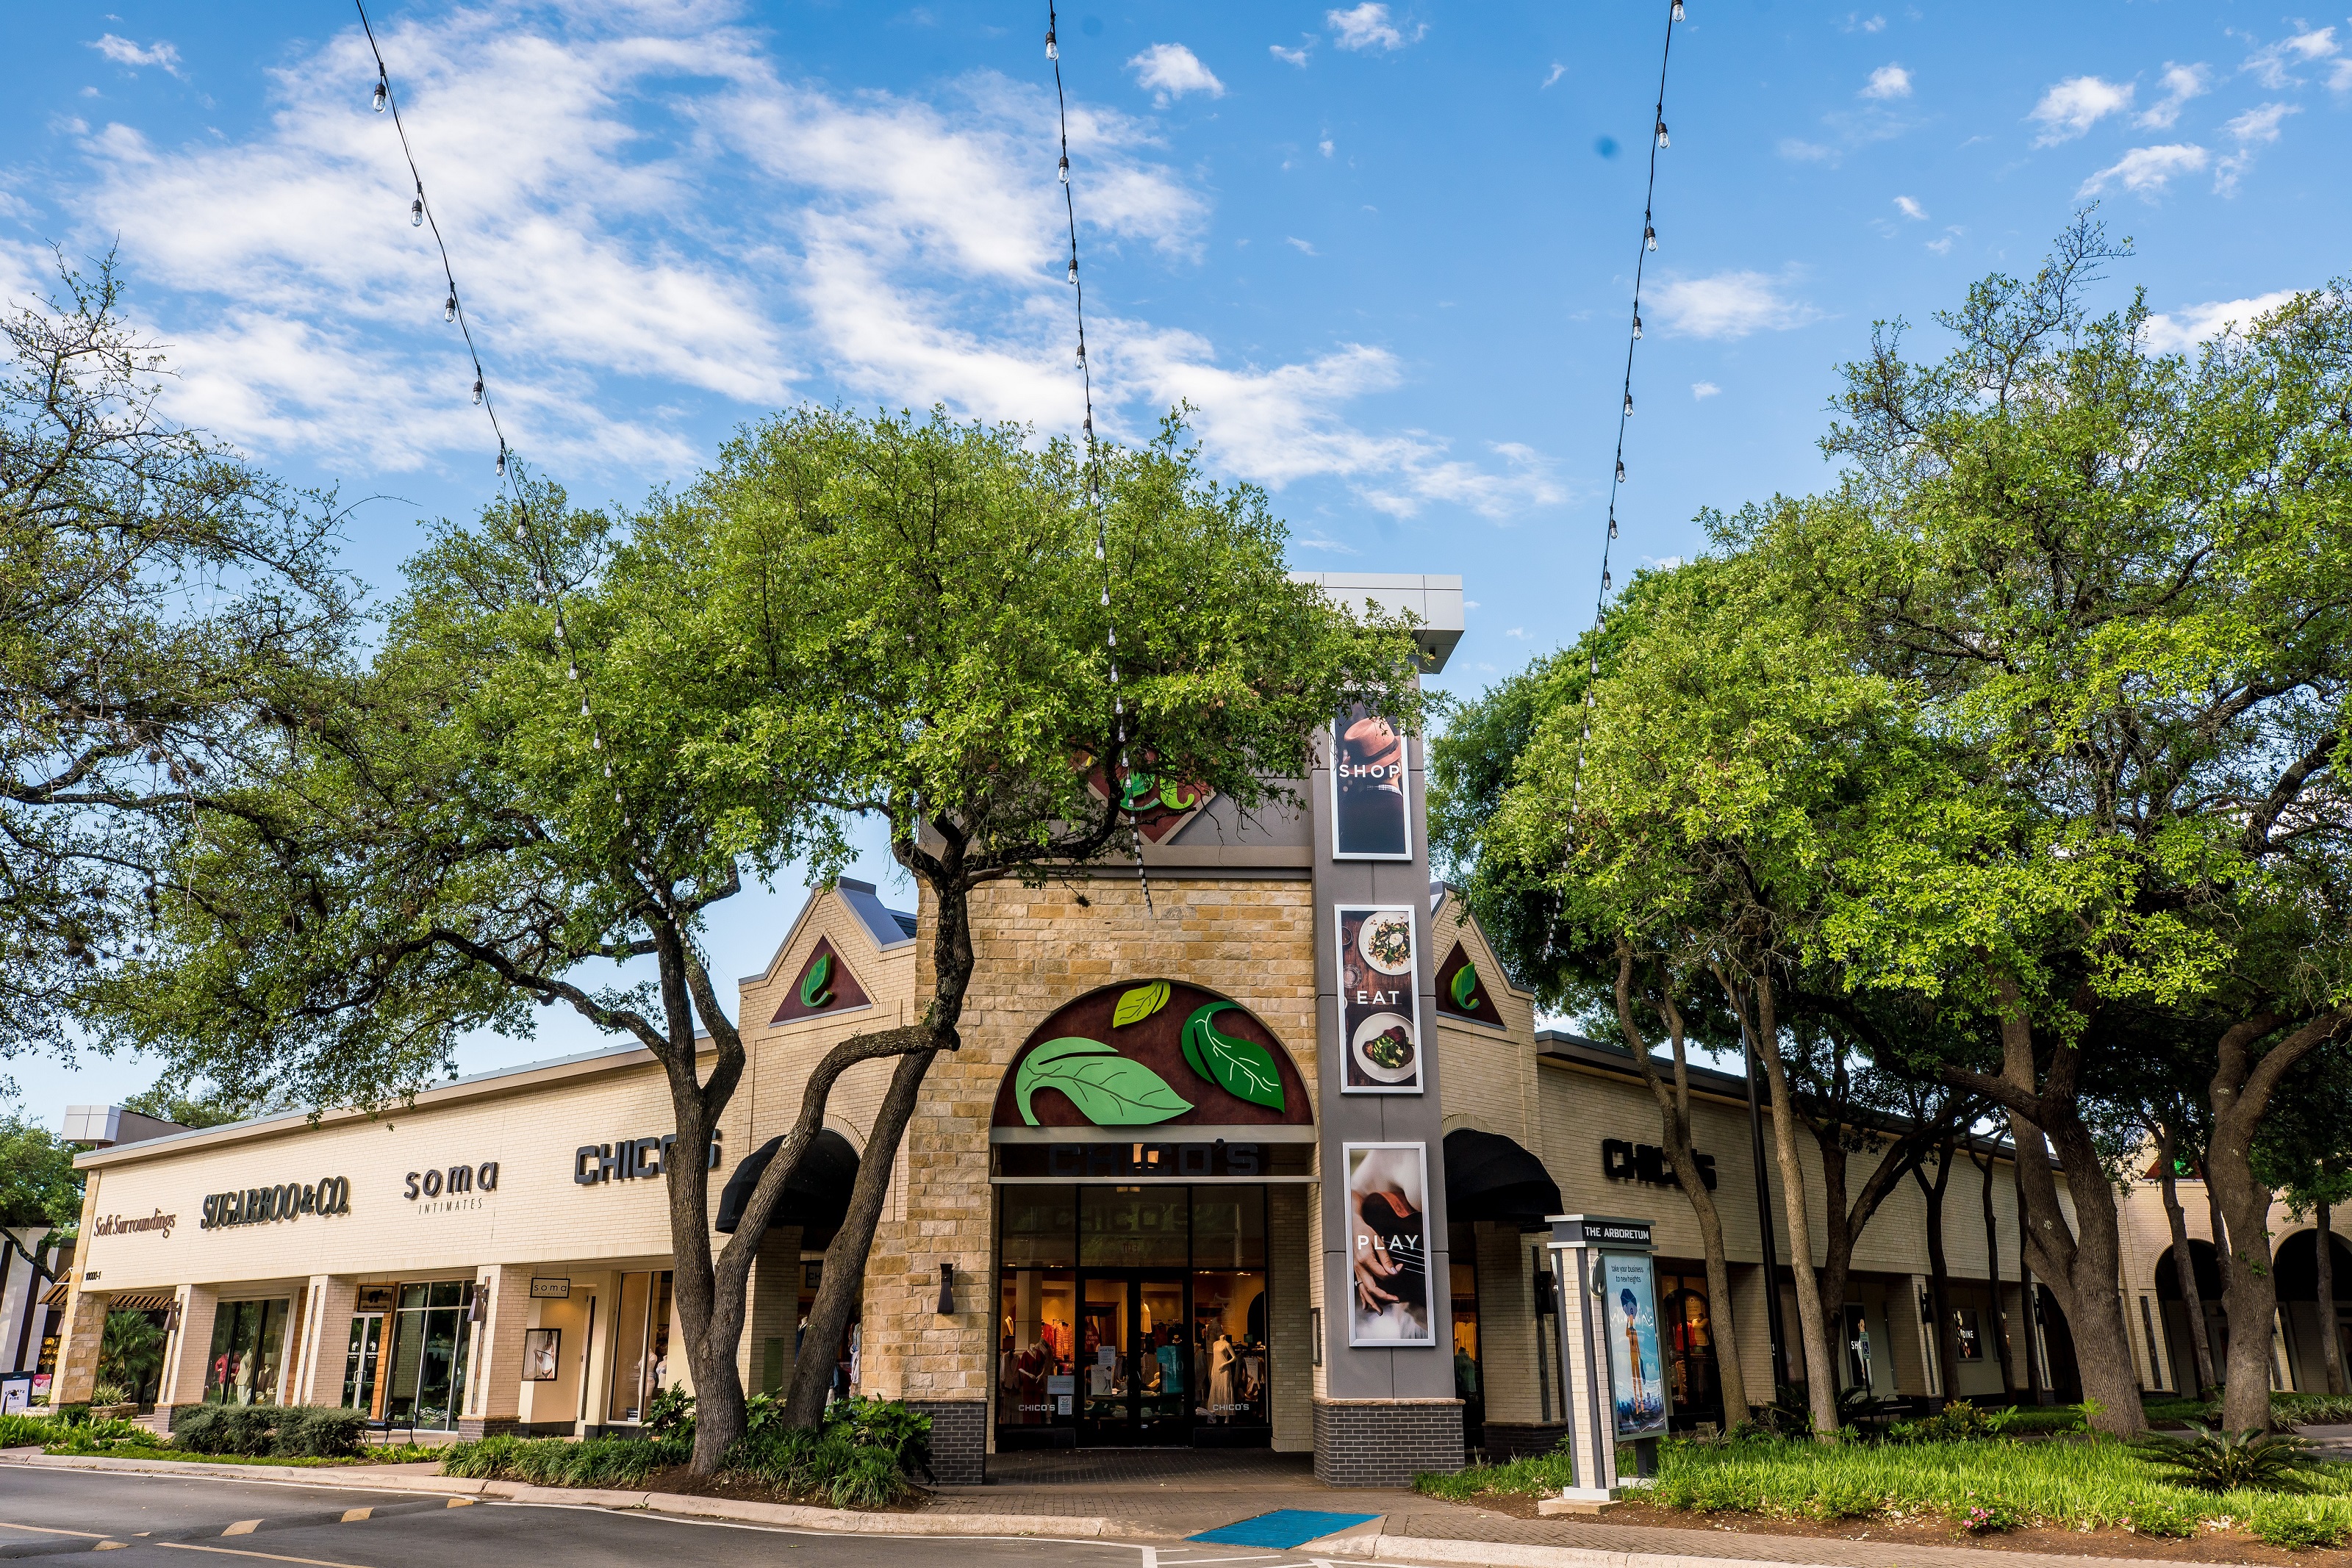 Northwest Austin: Understanding the Arboretum/Domain Micromarket